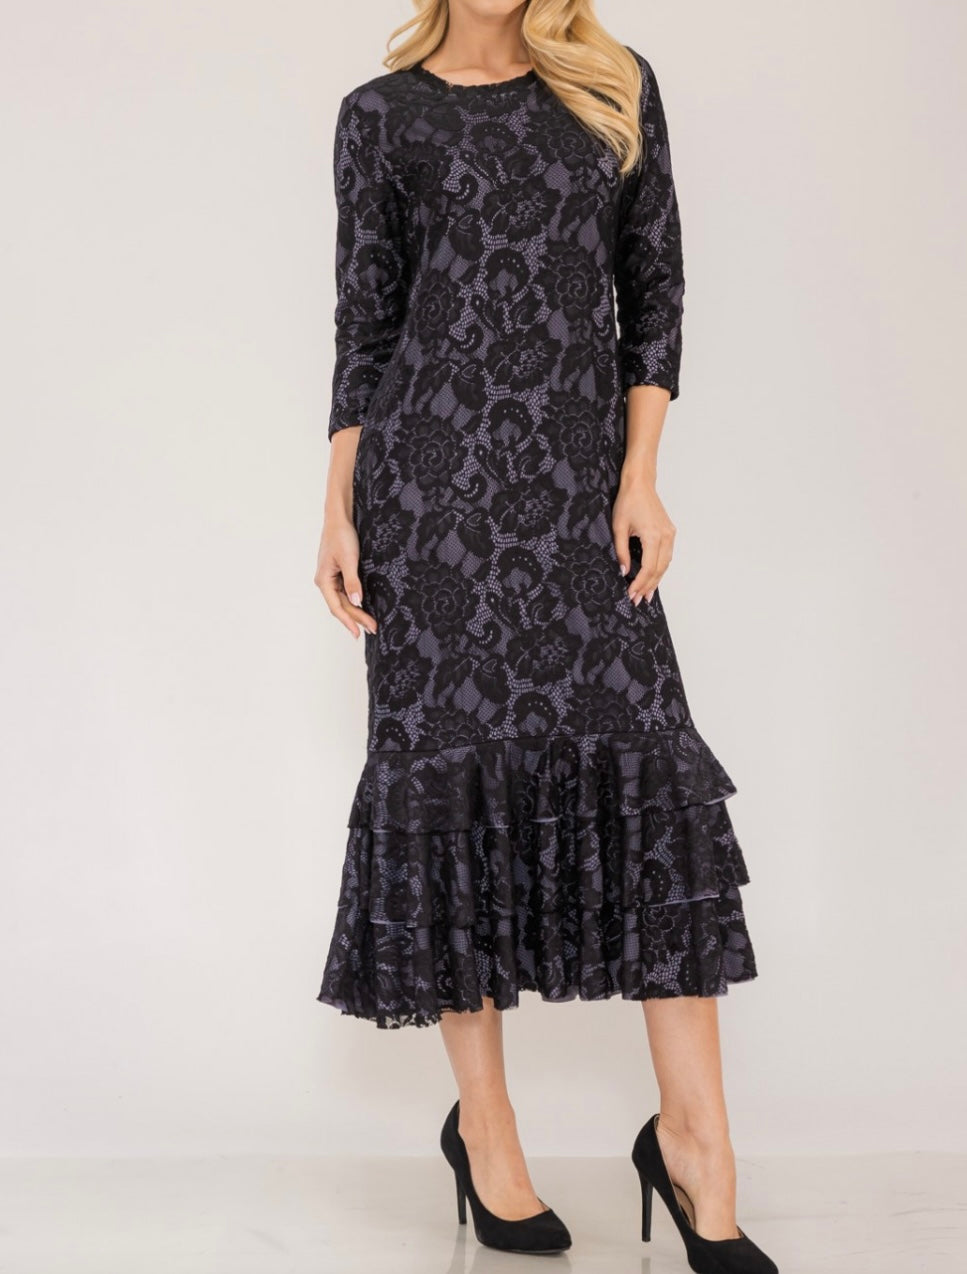 Liza Lou's Black Lace Long Layering Dress with Bottom Ruffles